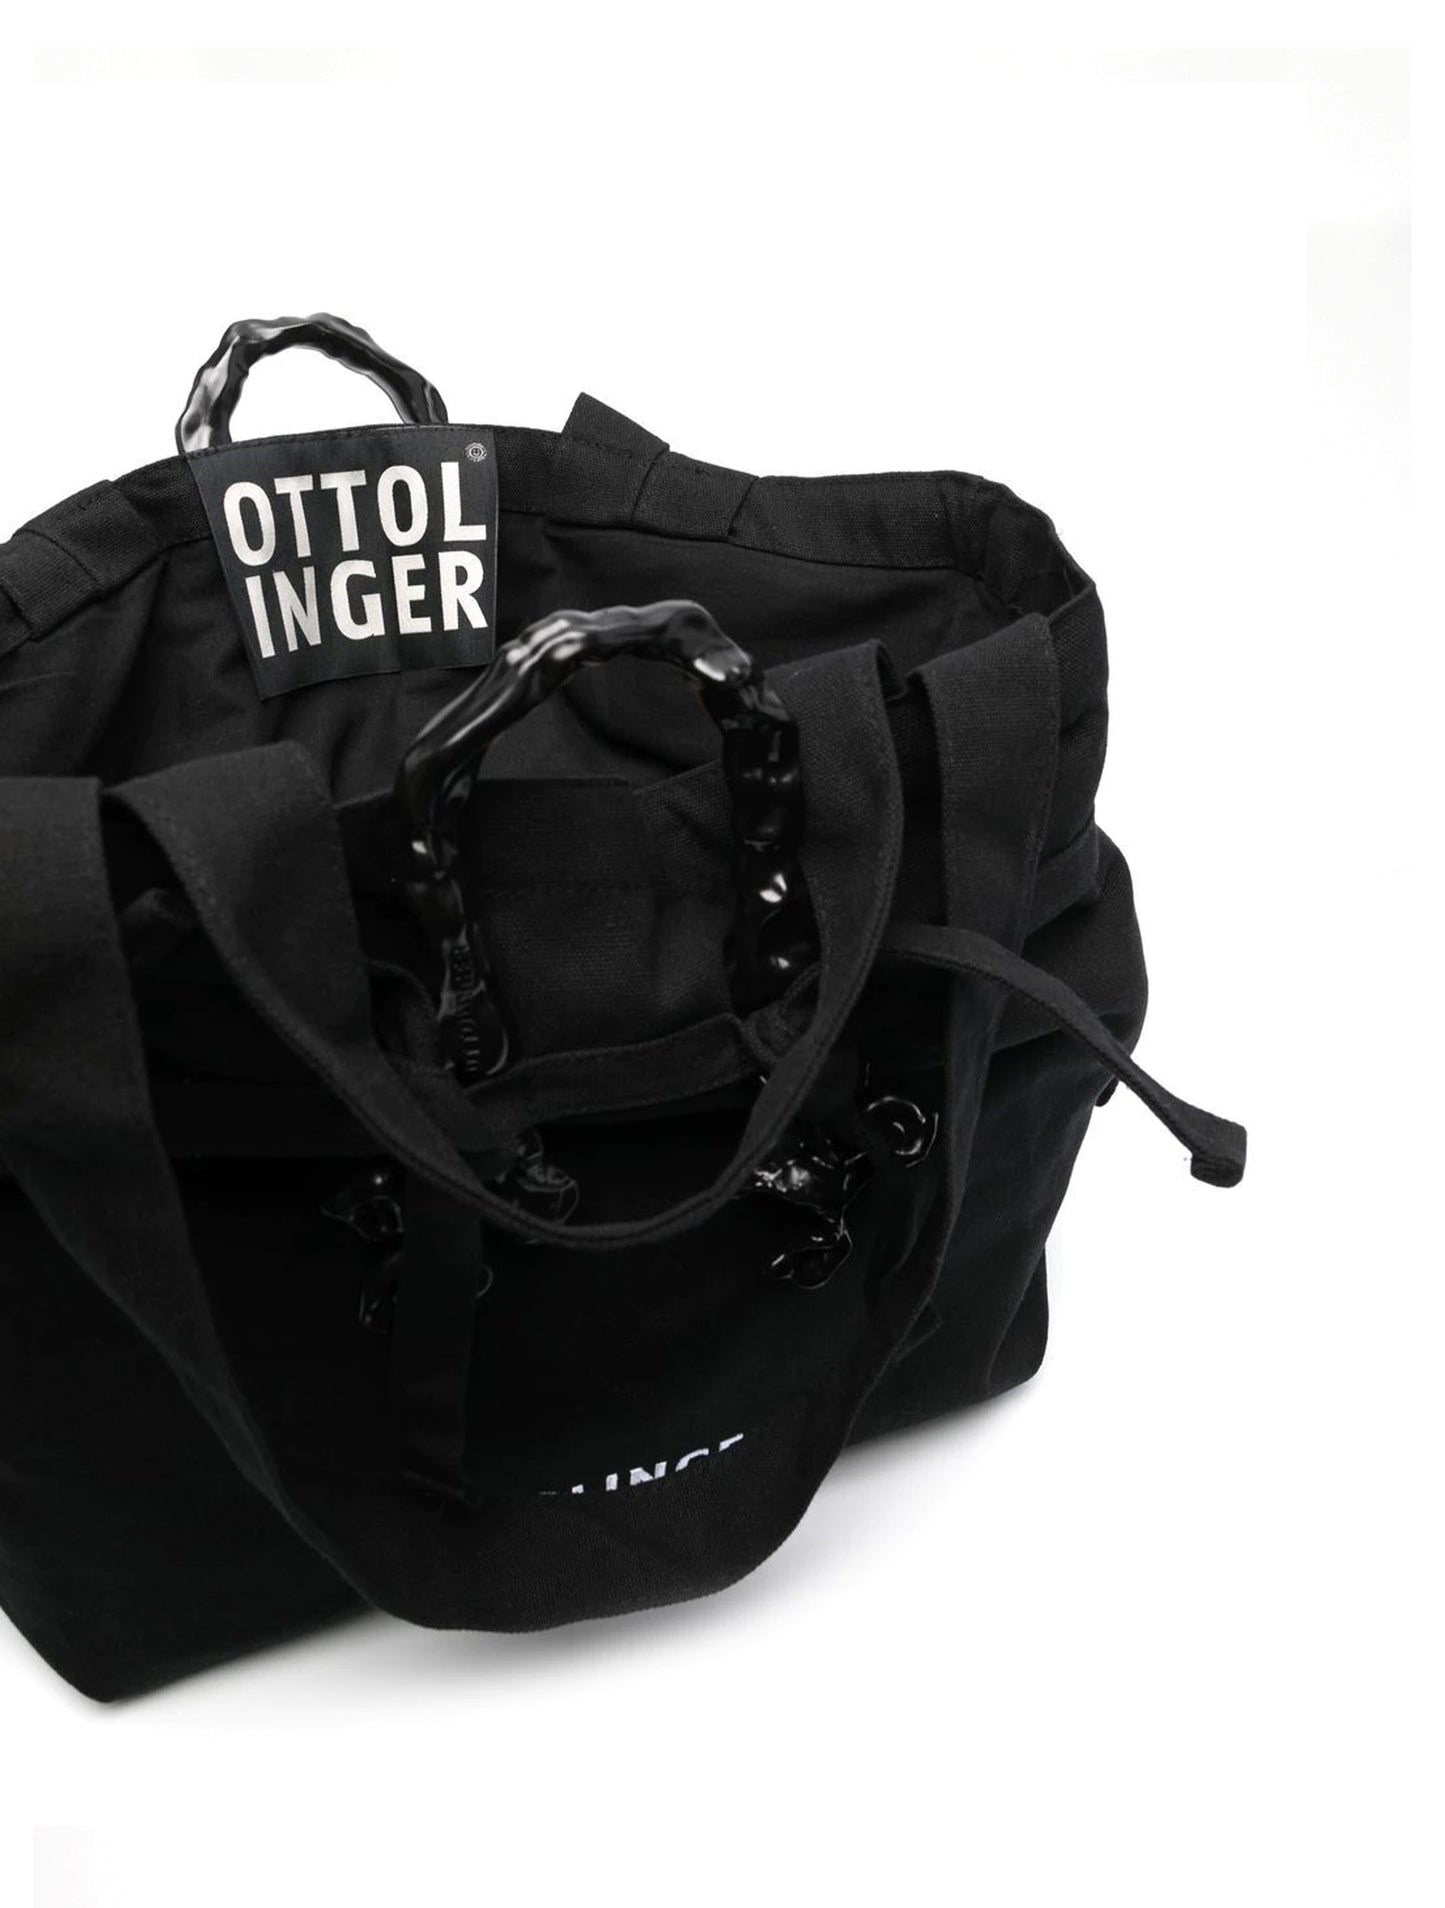 Ottolinger Black Denim Tote Bag